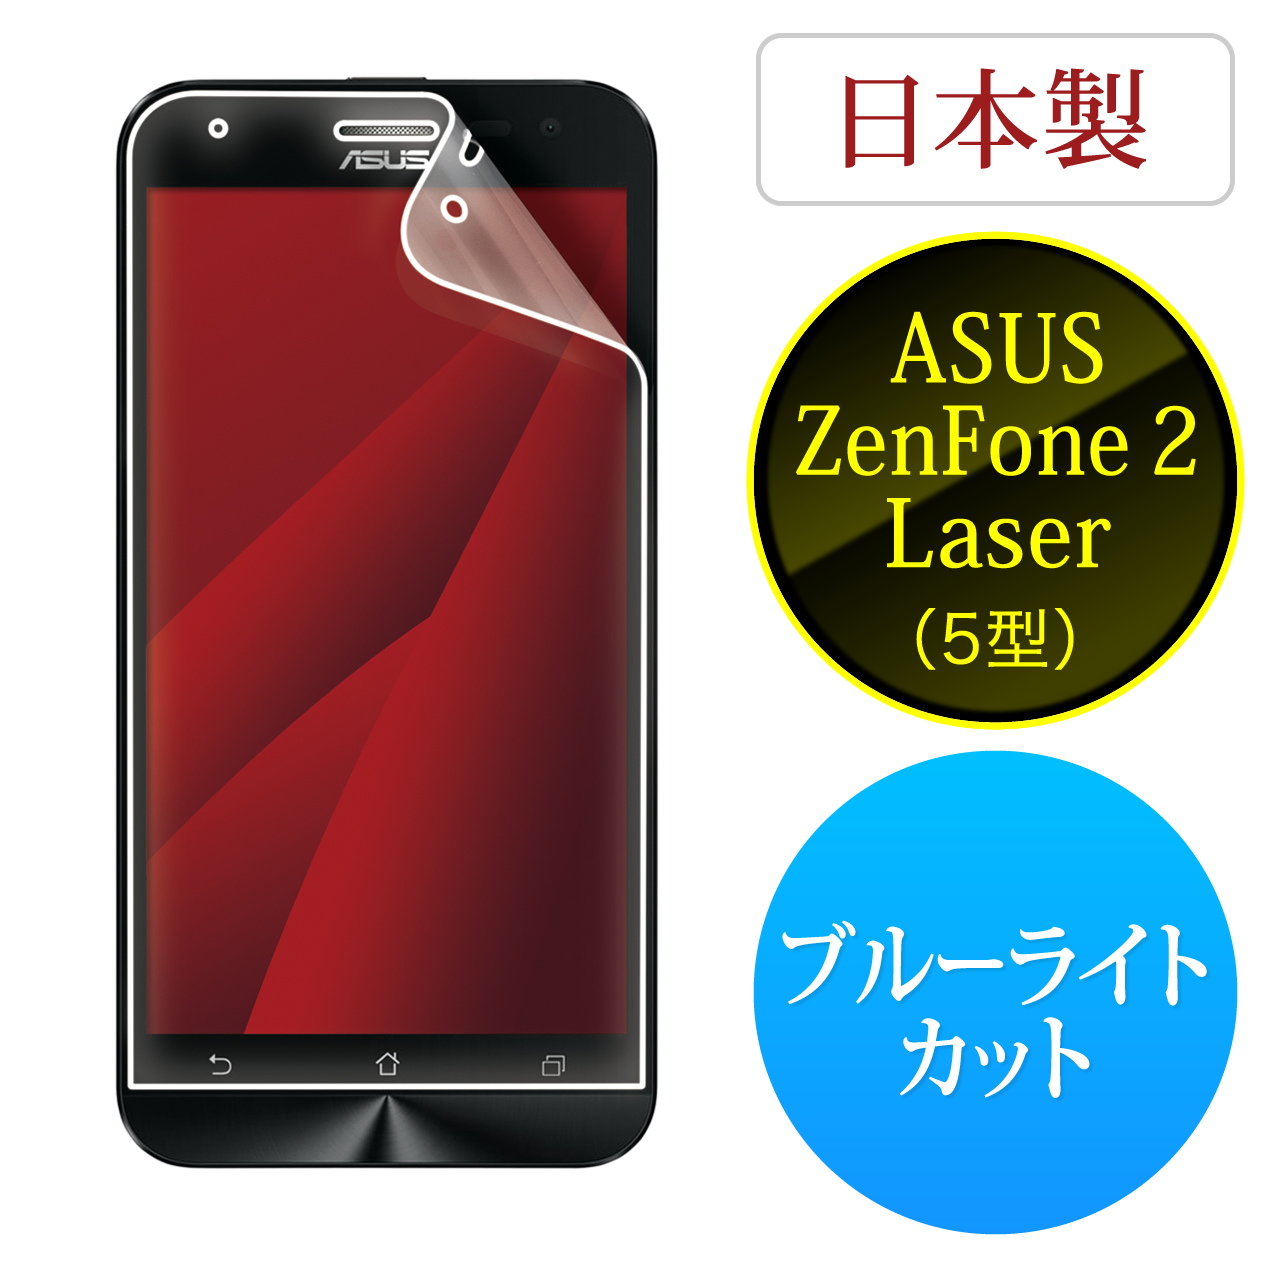 ASUS Zenfone 2 Laser/5^pՌzu[CgJbgtBiSIMt[X}zEZE500KLpE˖h~Edx3HE0.28mmEj 200-LCD035